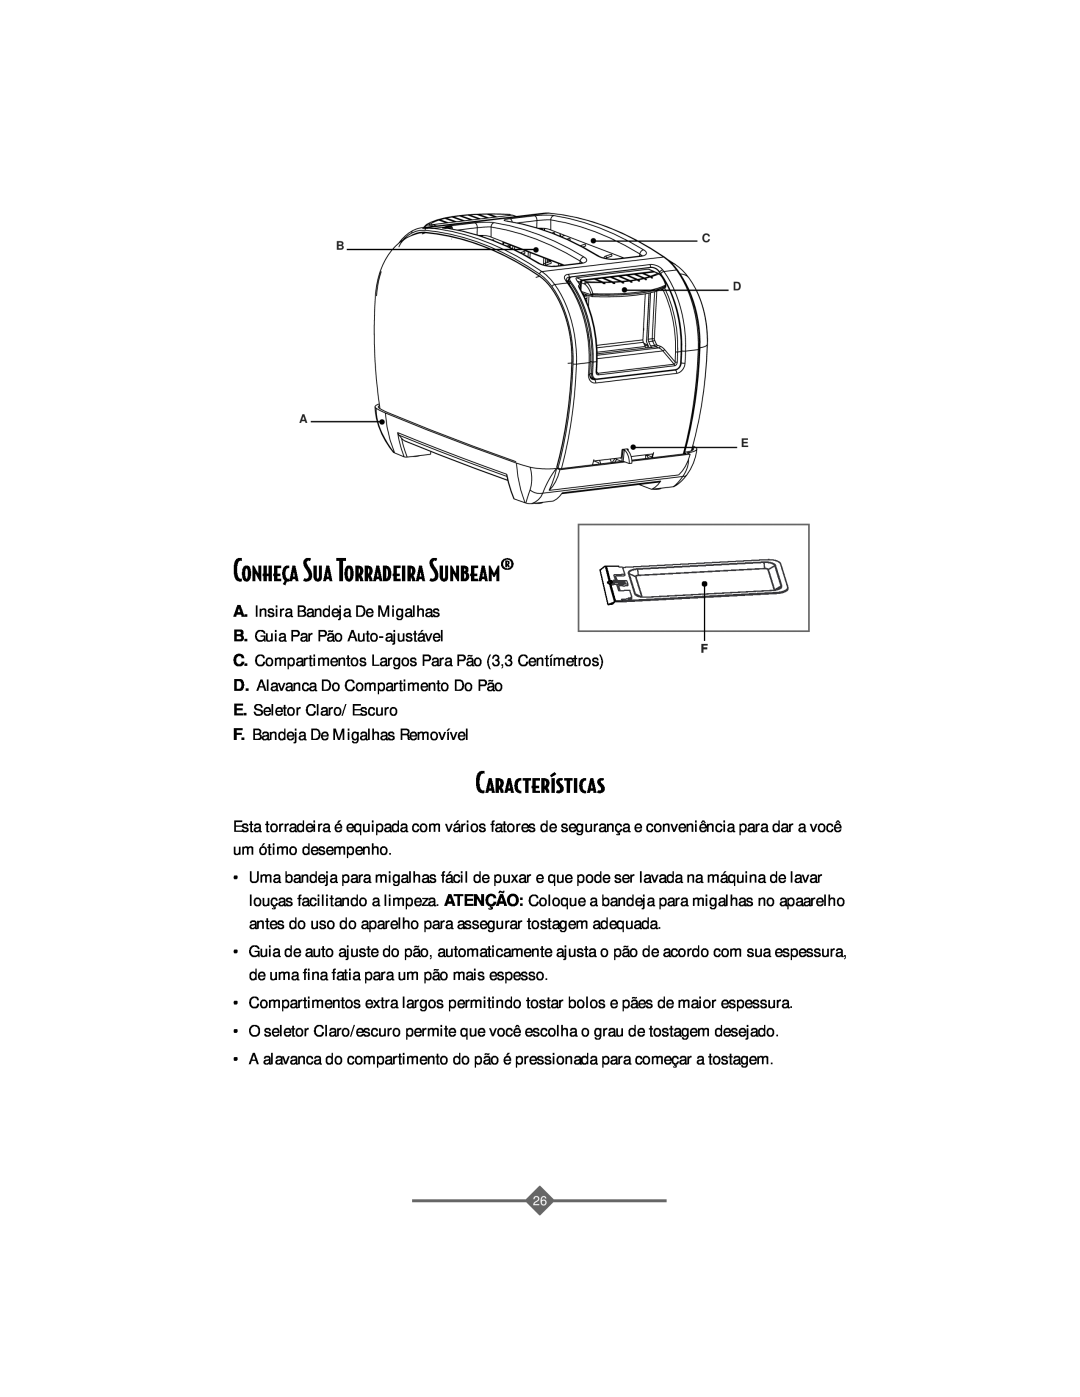 Sunbeam 3806 instruction manual Conhea Sua Torradeira Sunbeam¨, Caracter’sticas 